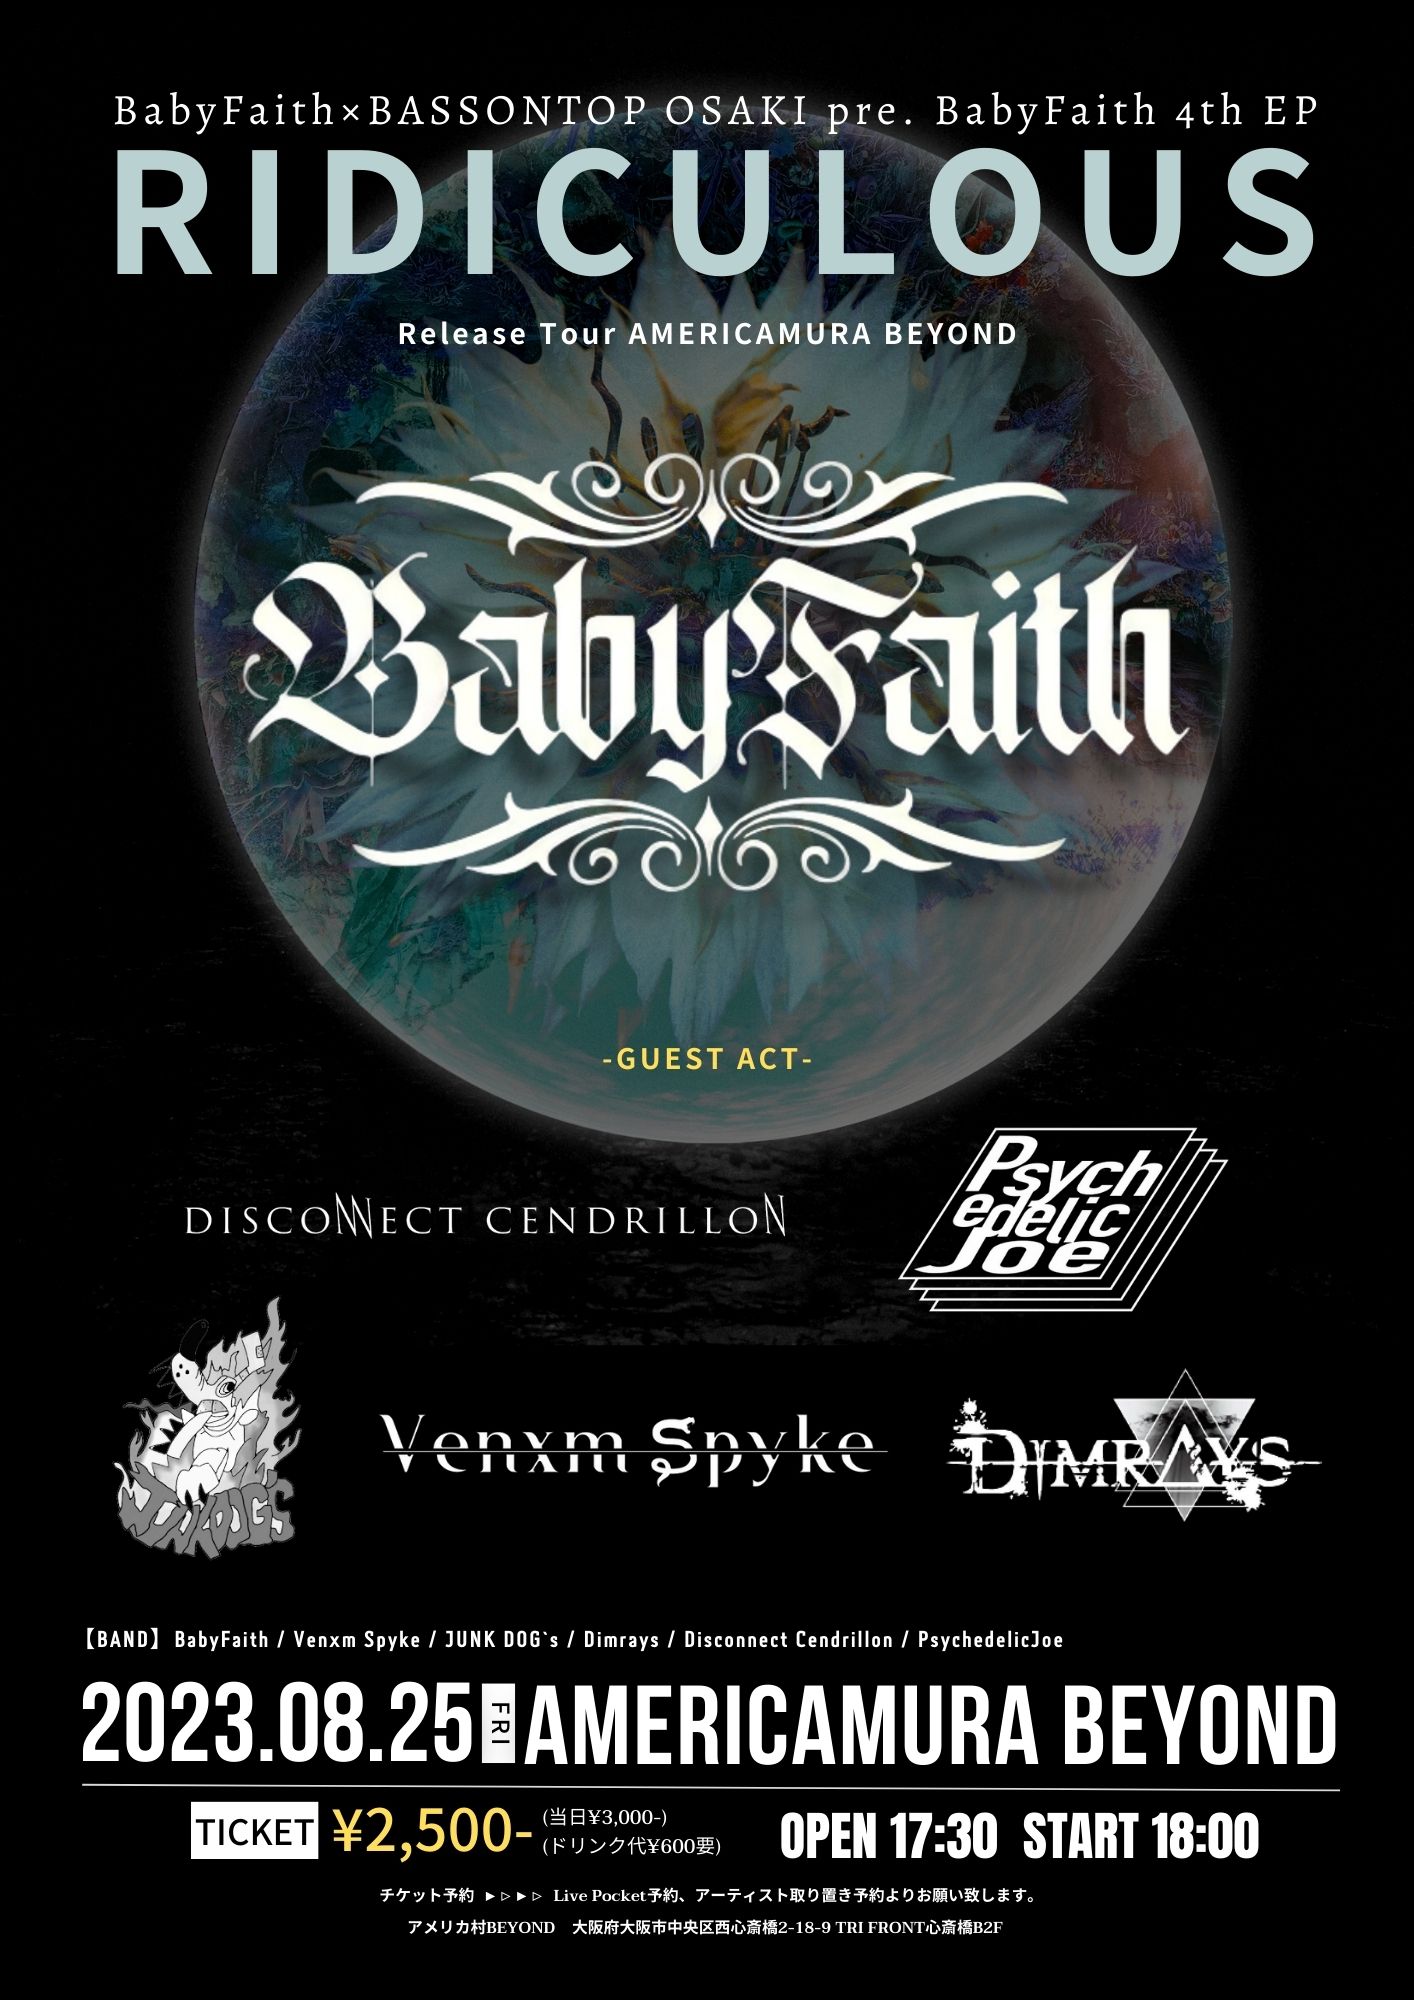 BabyFaith×BASSONTOP OSAKI pre. BabyFaith 4th EP 『RIDICULOUS』Release Tour AMERICAMURA BEYOND